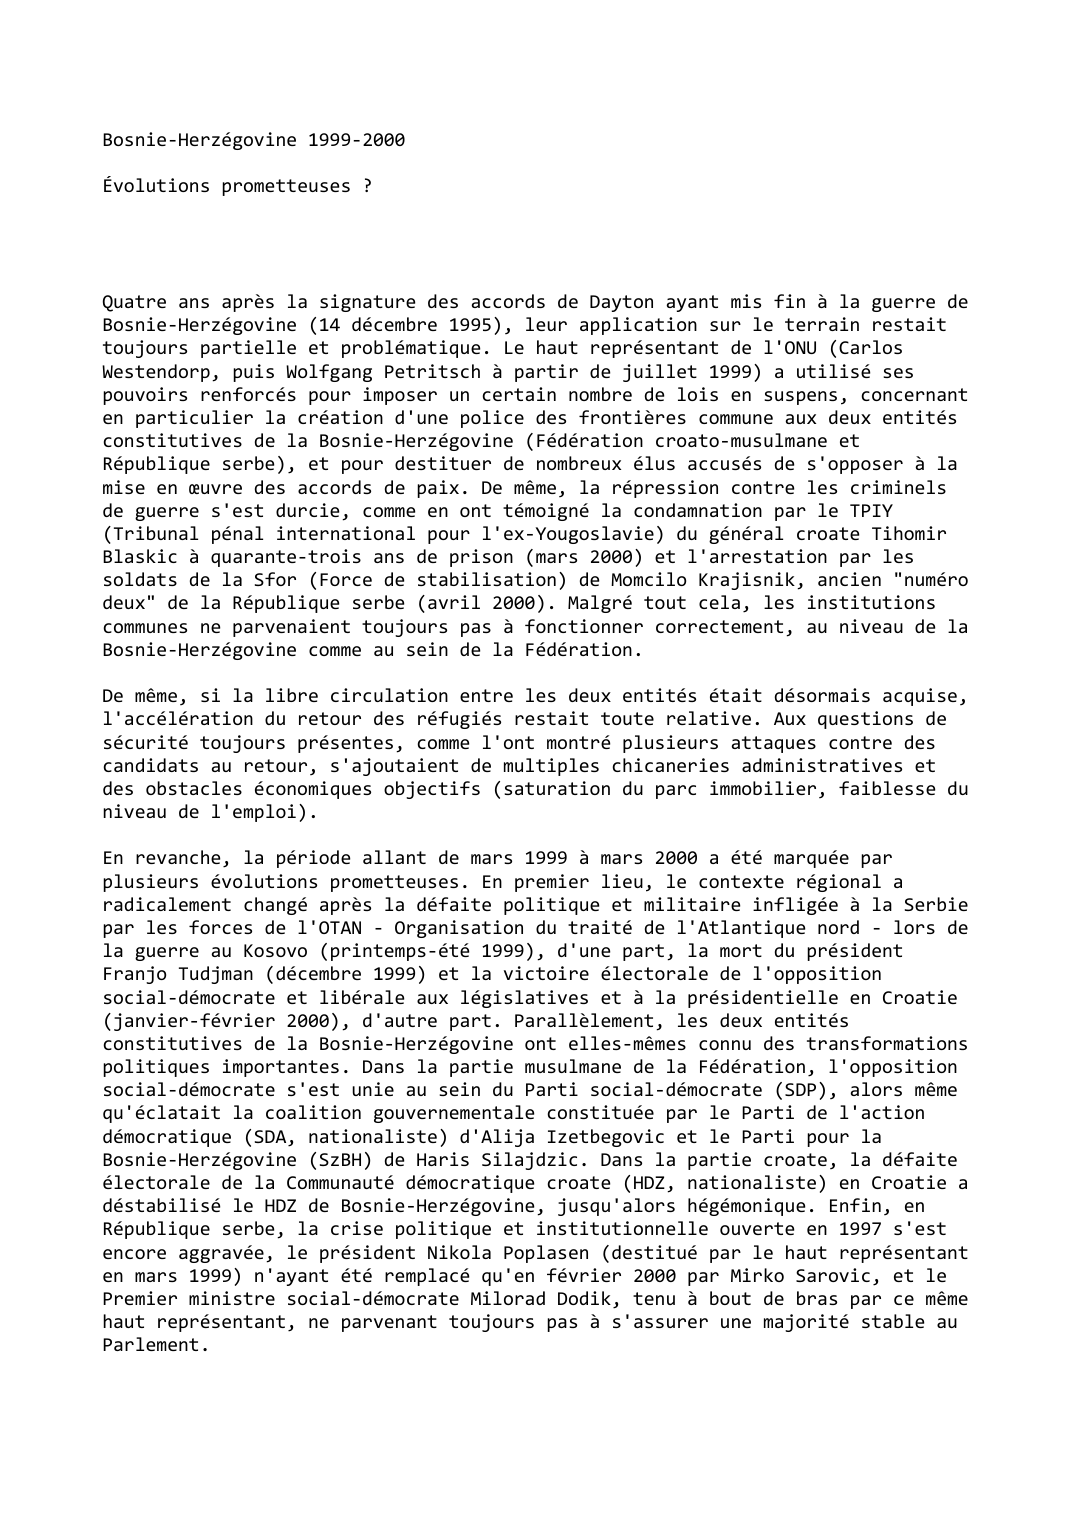 Prévisualisation du document Bosnie-Herzégovine (1999-2000): Évolutions prometteuses ?